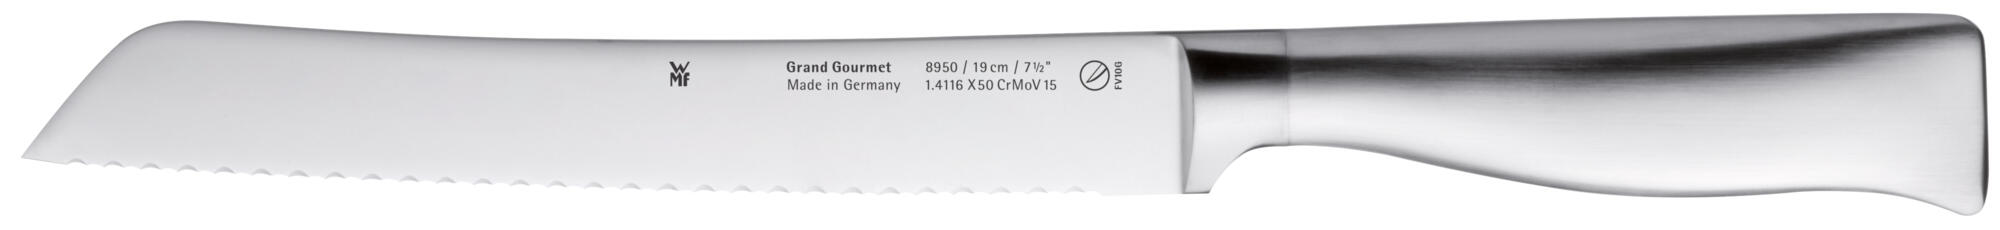 GRAND GOURMET Bread knife 19cm